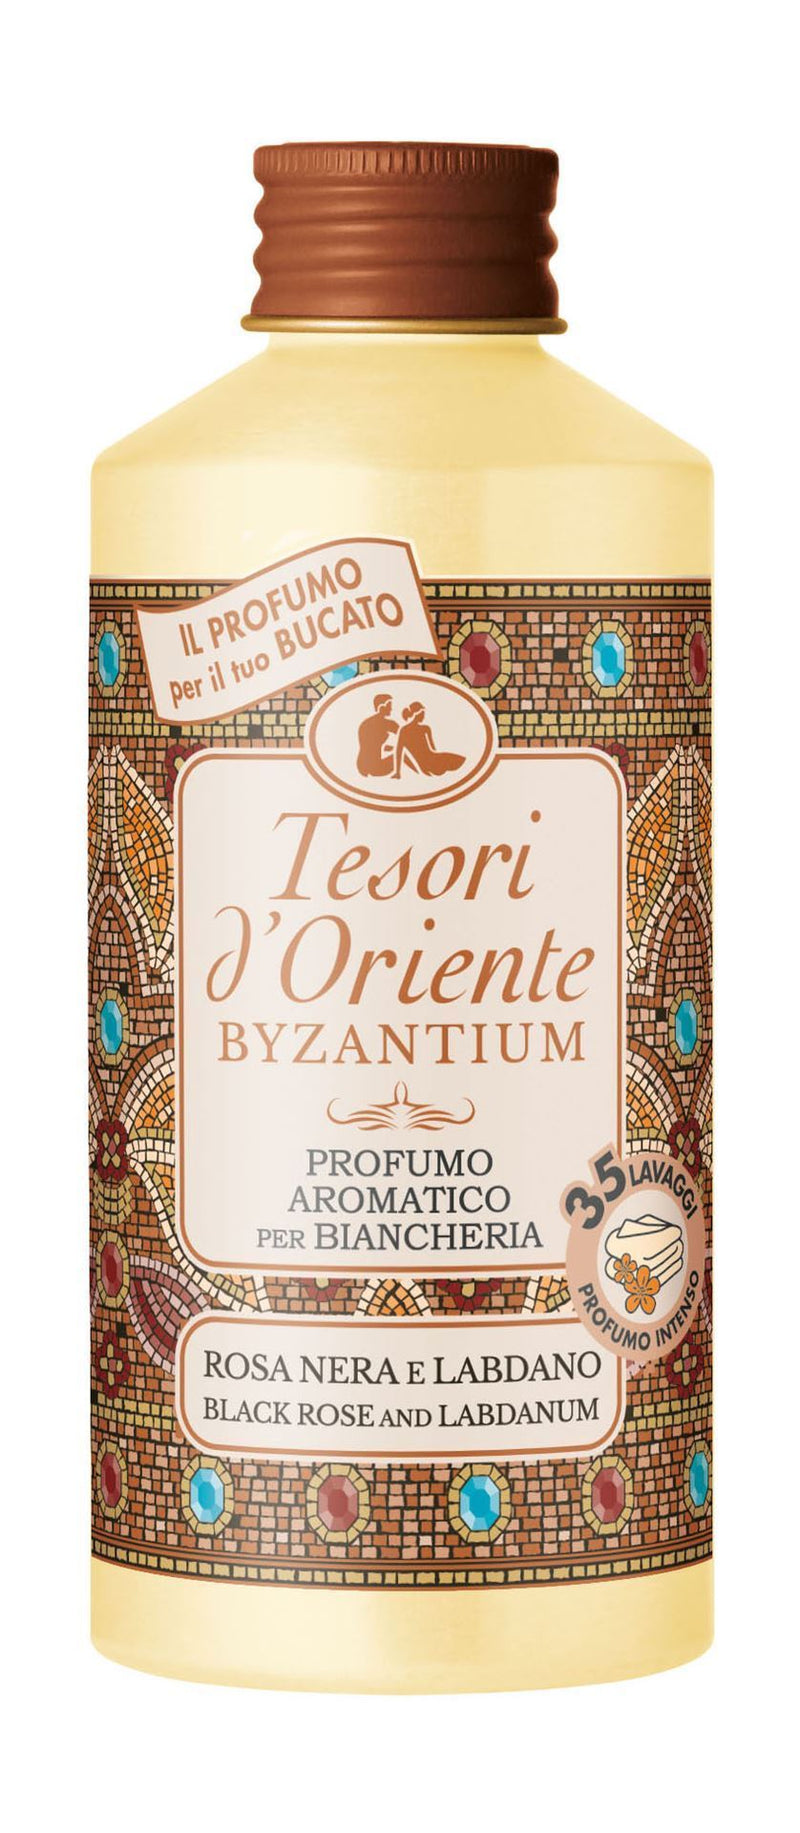 Tesori d'Oriente Perfume for Laundry Byzantium 250 ml – EMPORIO ITALIANO